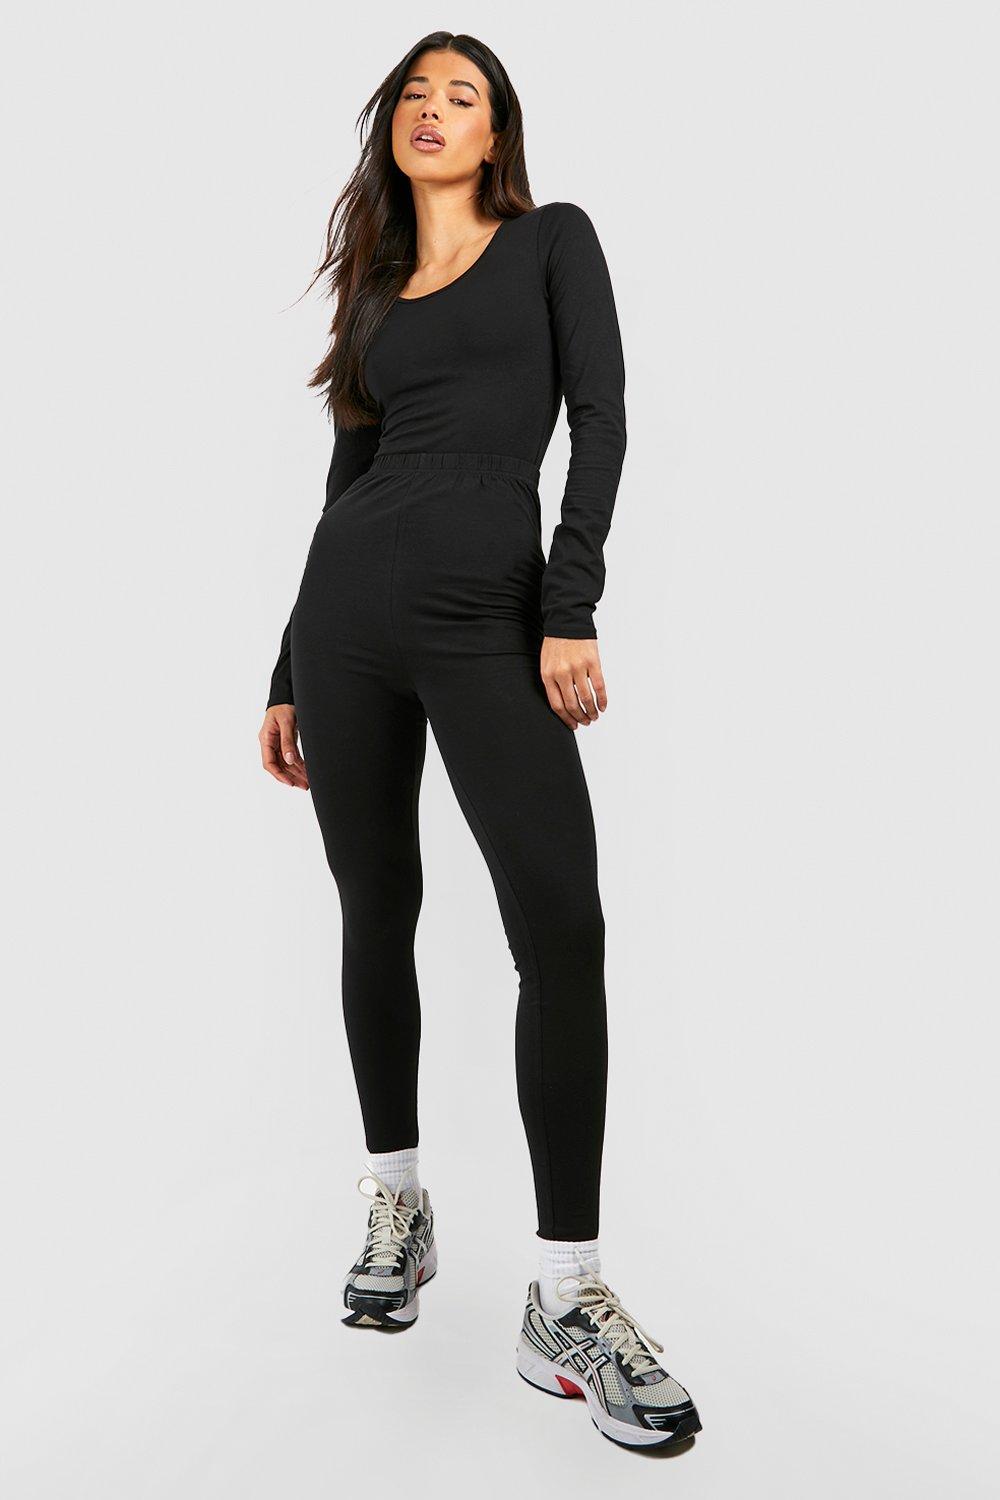 https://media.boohoo.com/i/boohoo/dzz96690_black_xl_3/female-black-tall-long-sleeve-basic-bodysuit